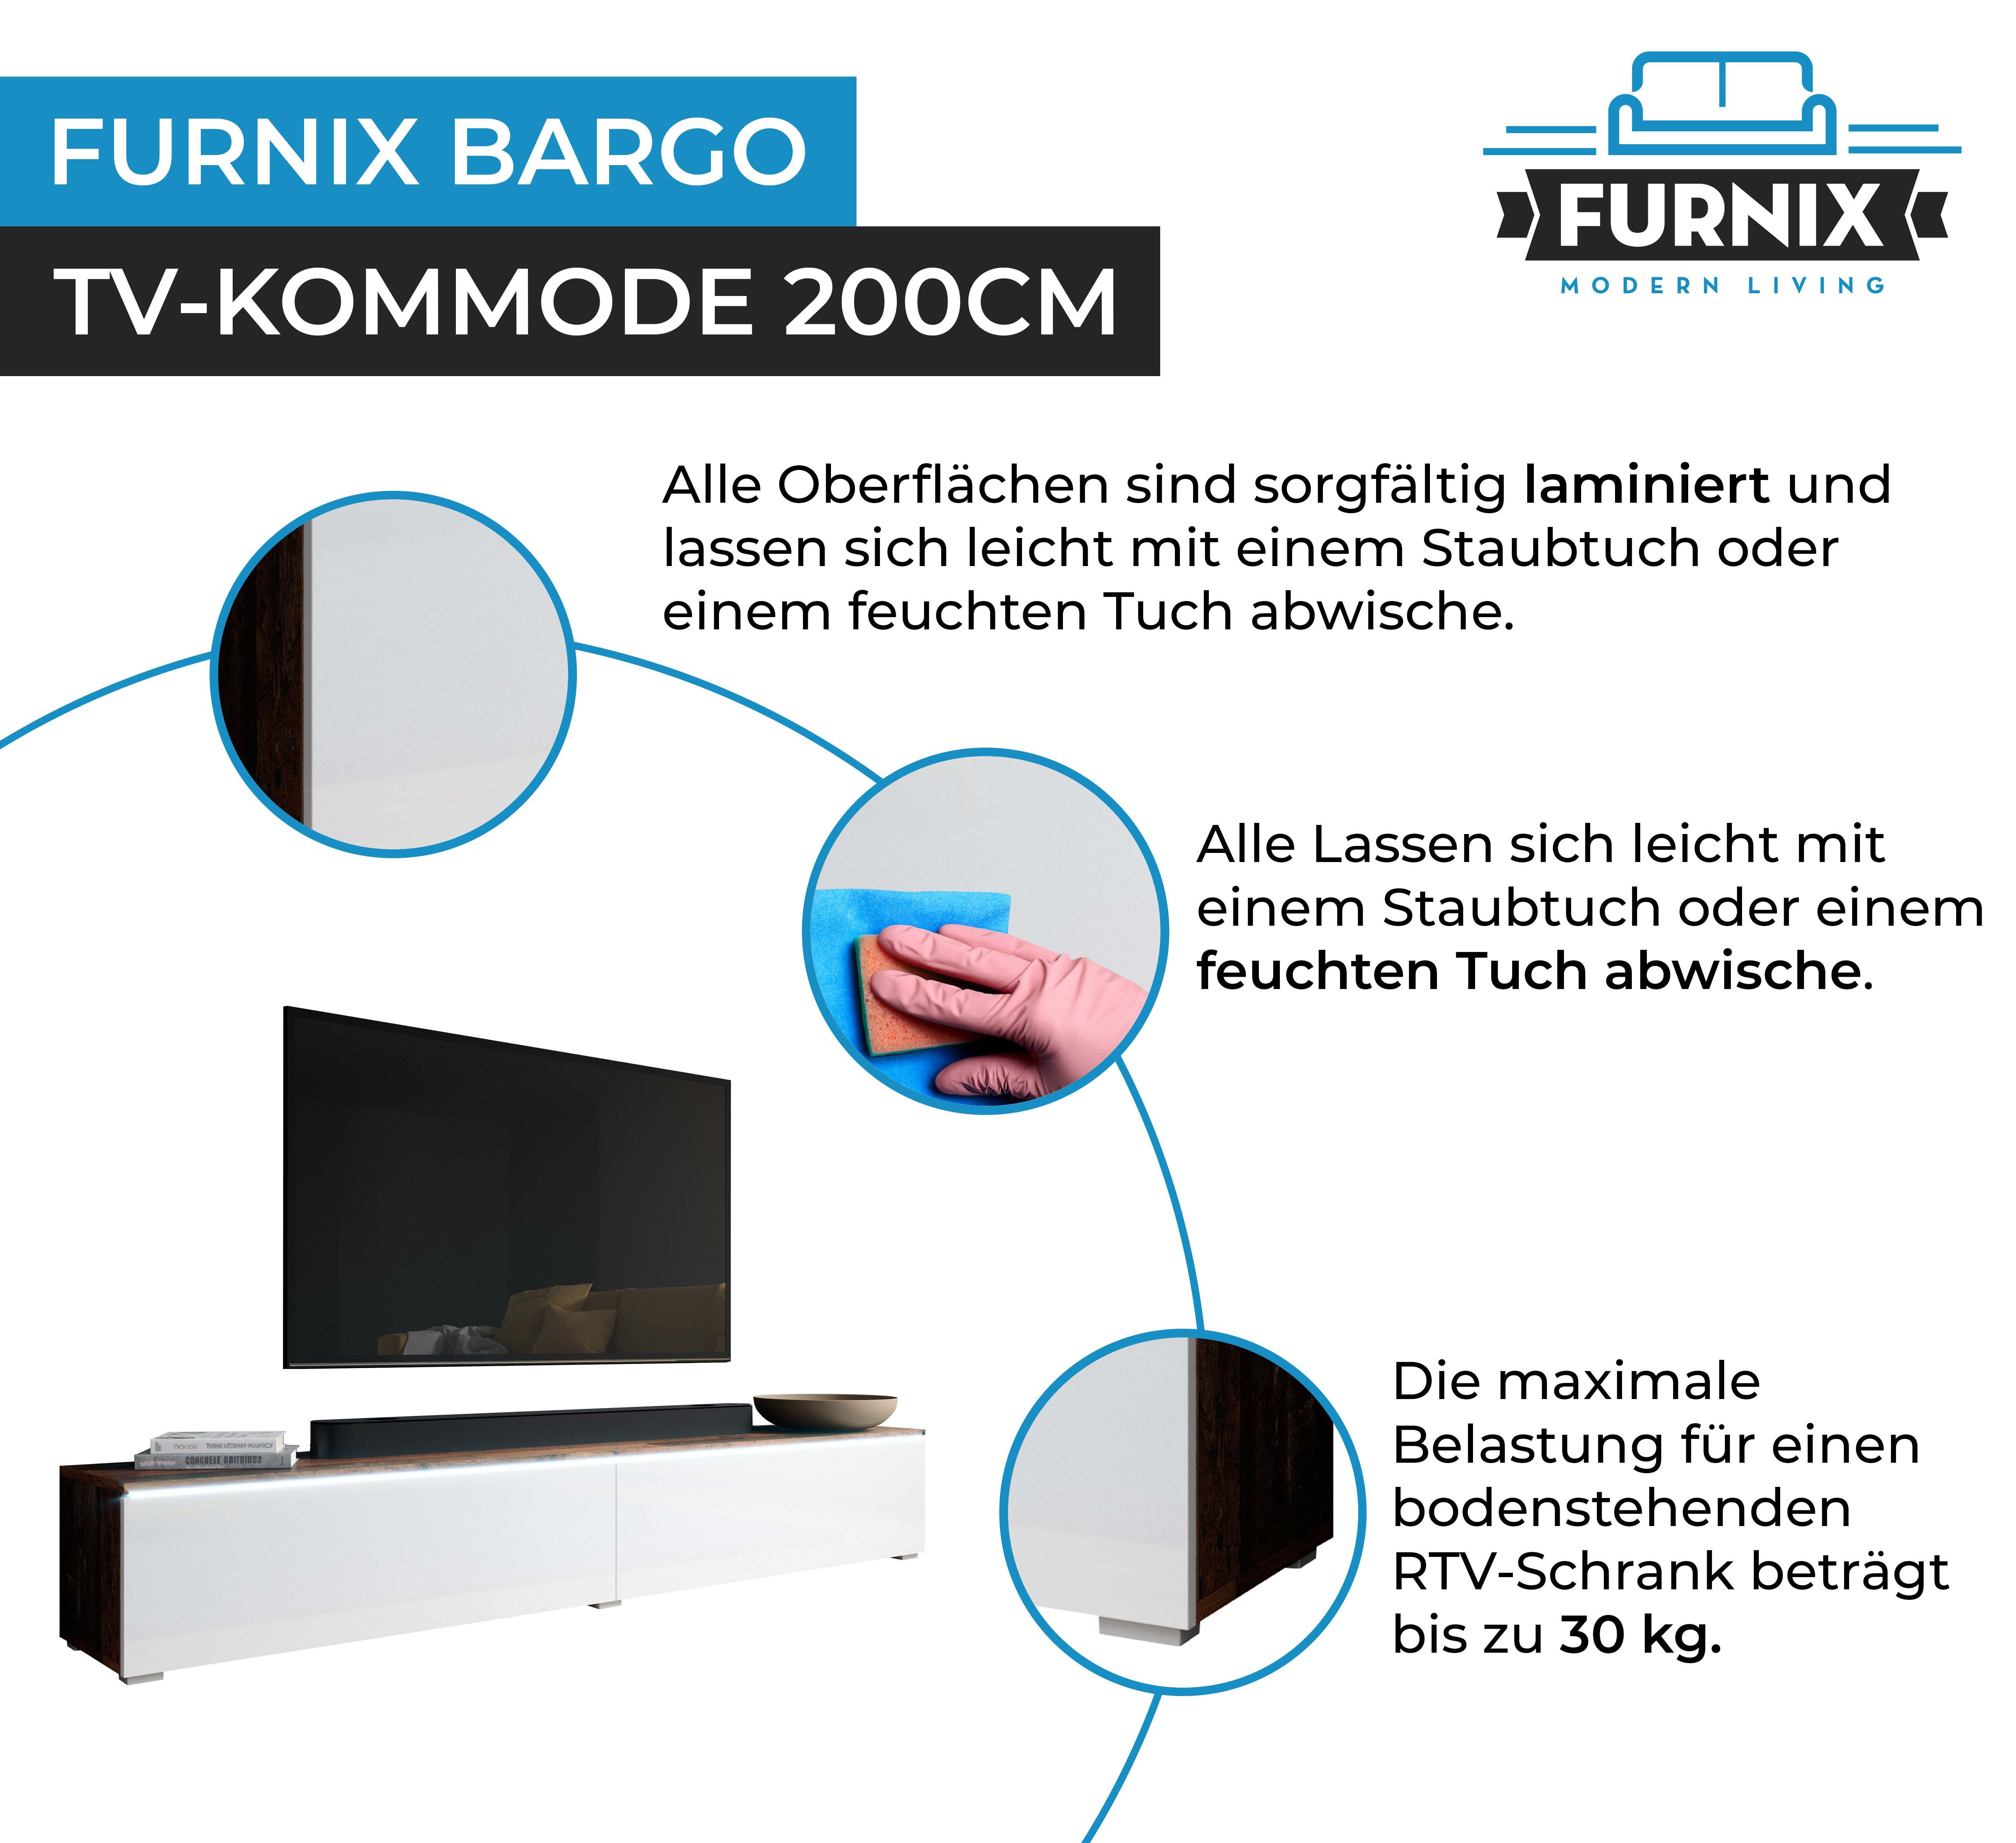 H34 T32 4 x wood/Weiß Hochglanz freistehend, B200 old x TV-Kommode ohne Schrank Furnix TV-Bank cm, Fächer, cm) x LED Lowboard 100 BARGO (2